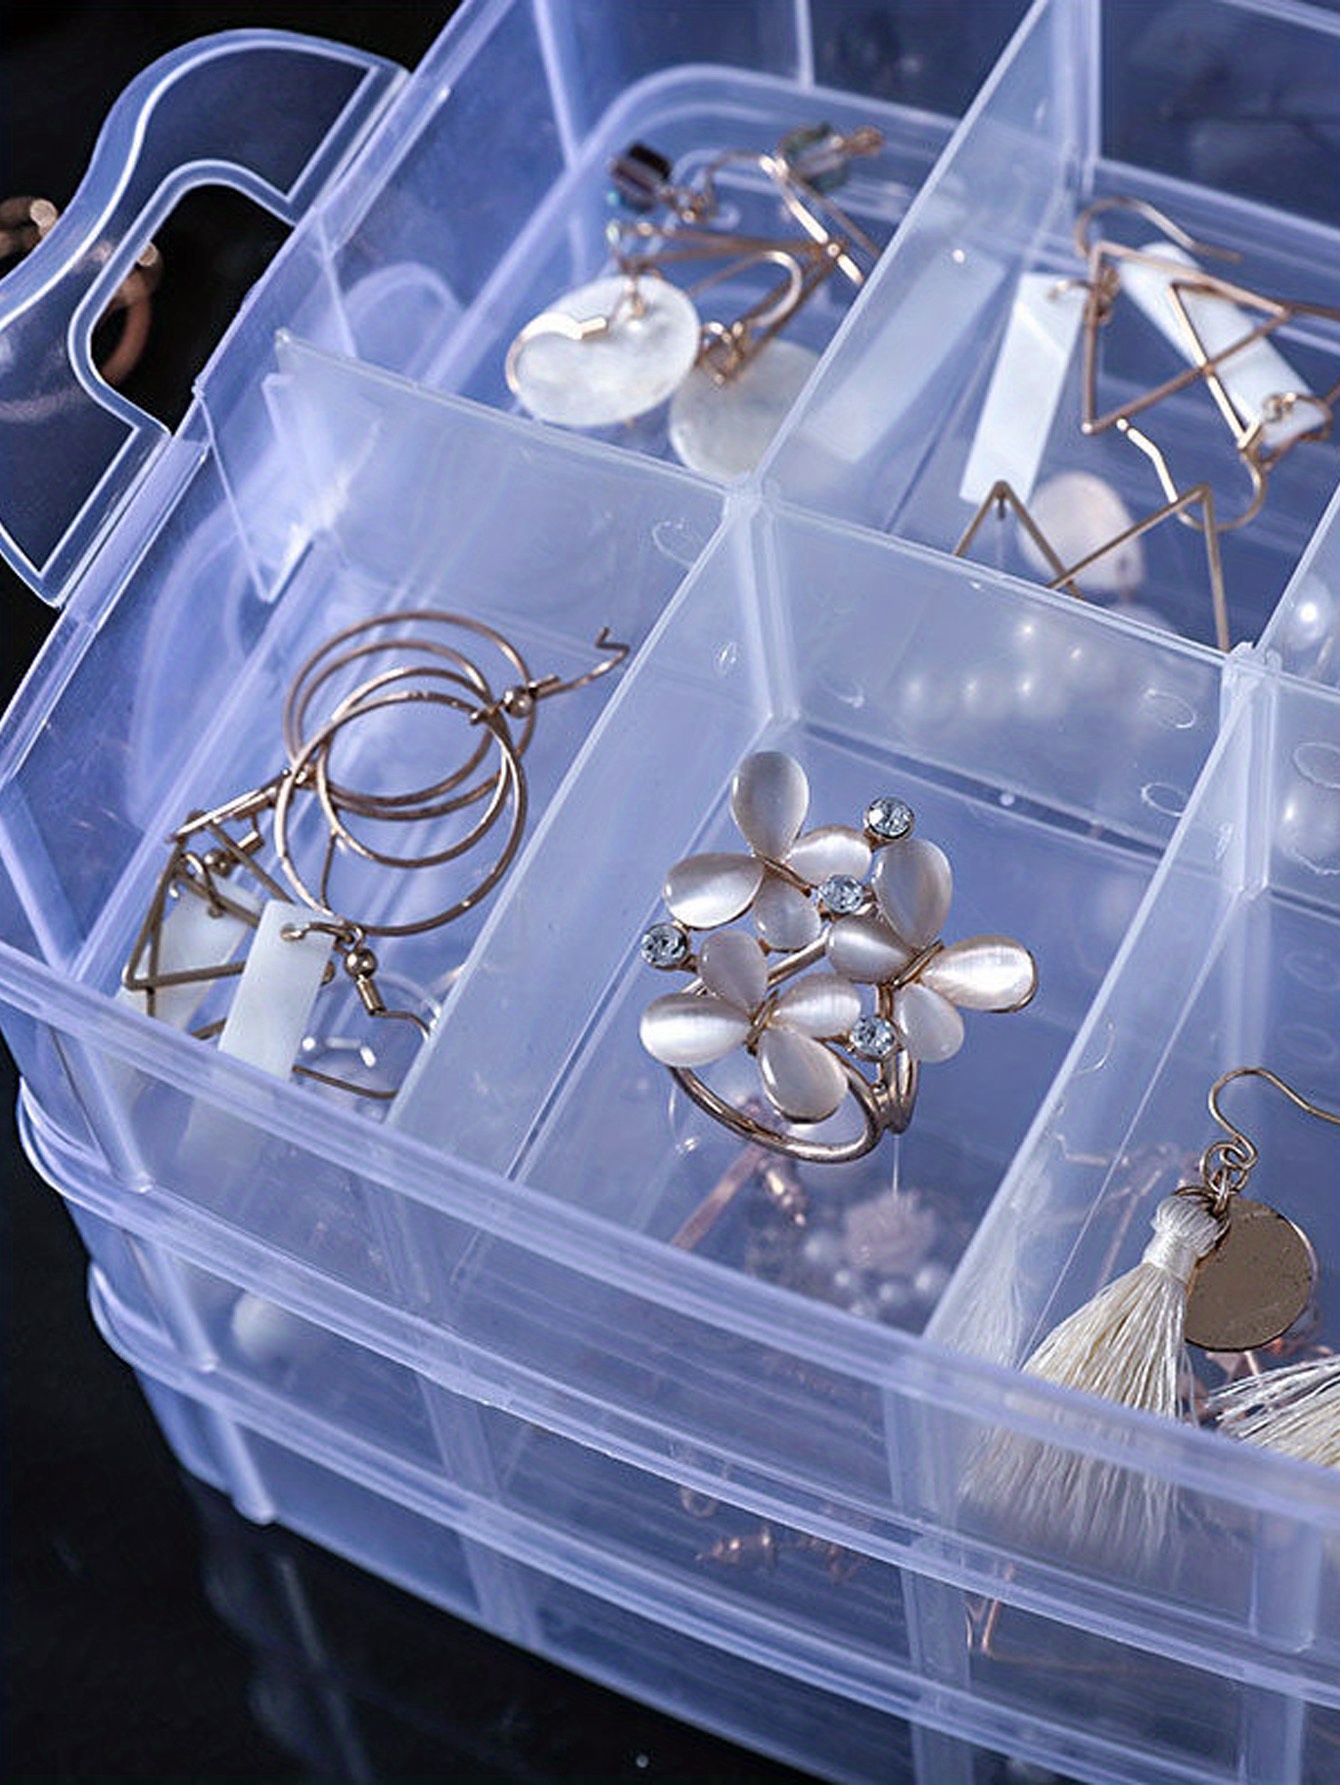 Generic Jewelry Organizer Box Transparent Display Case Three Layer